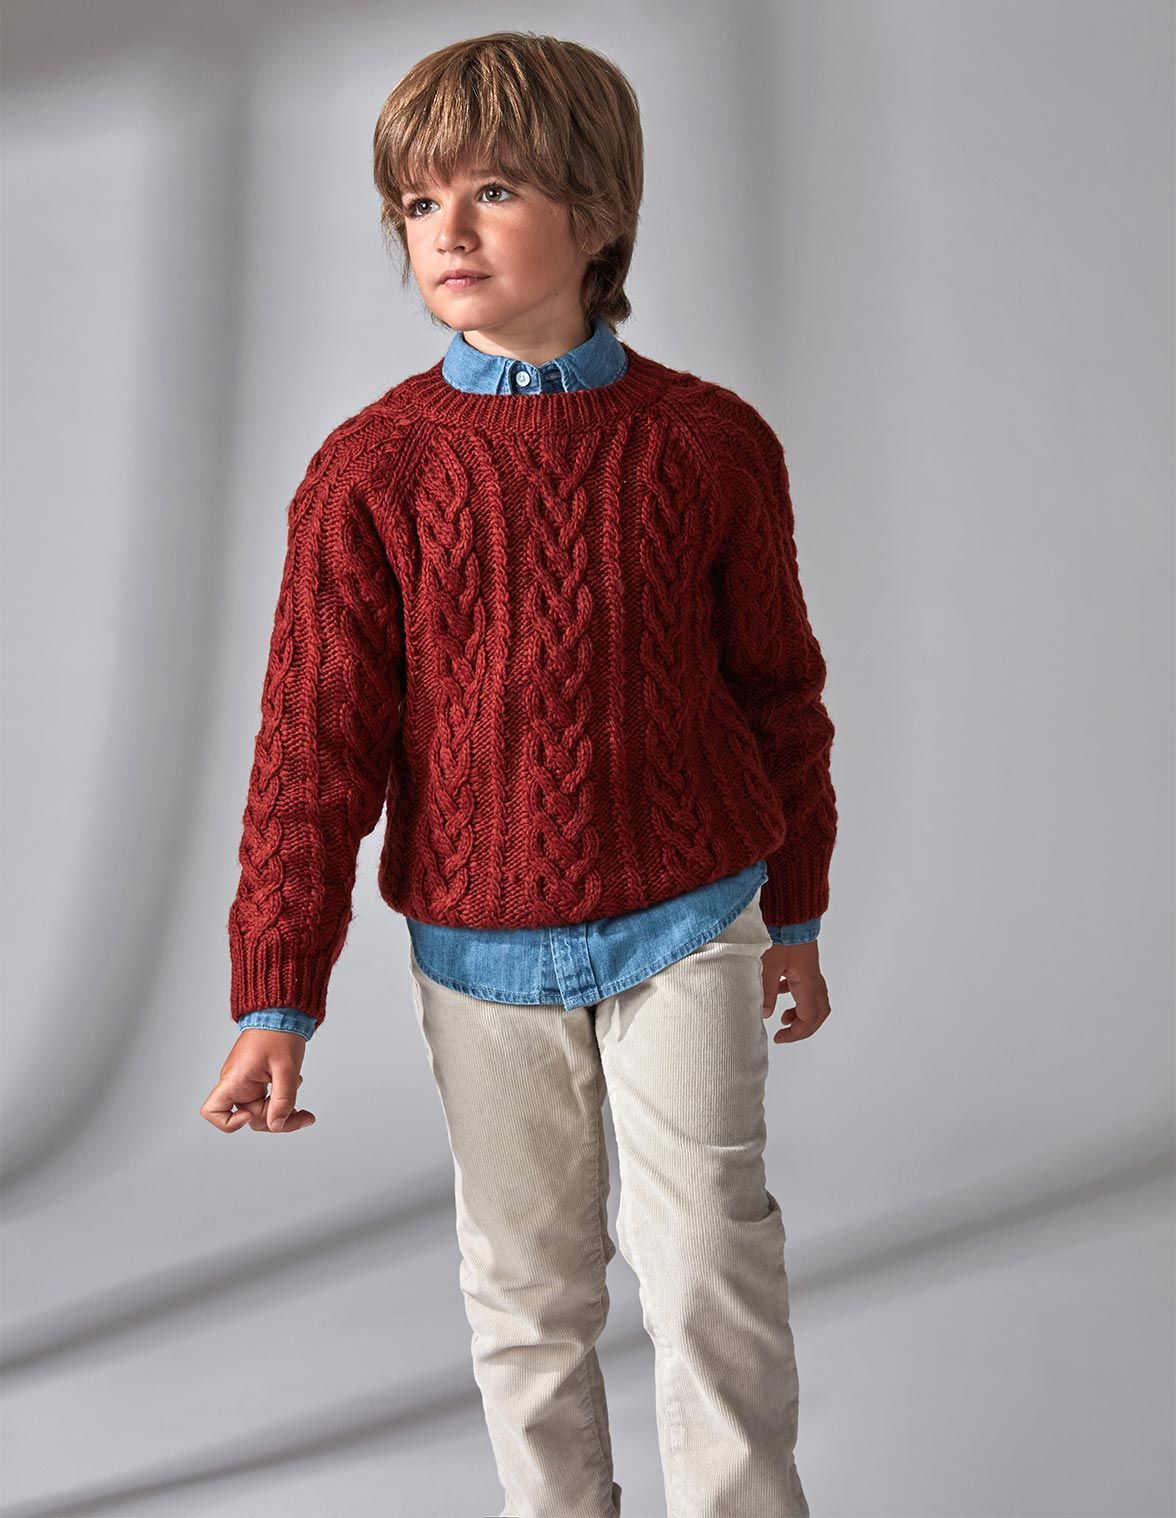 Gocco Boy's Jersey Crudo Mezcla Con Botones De Madera Sweater 